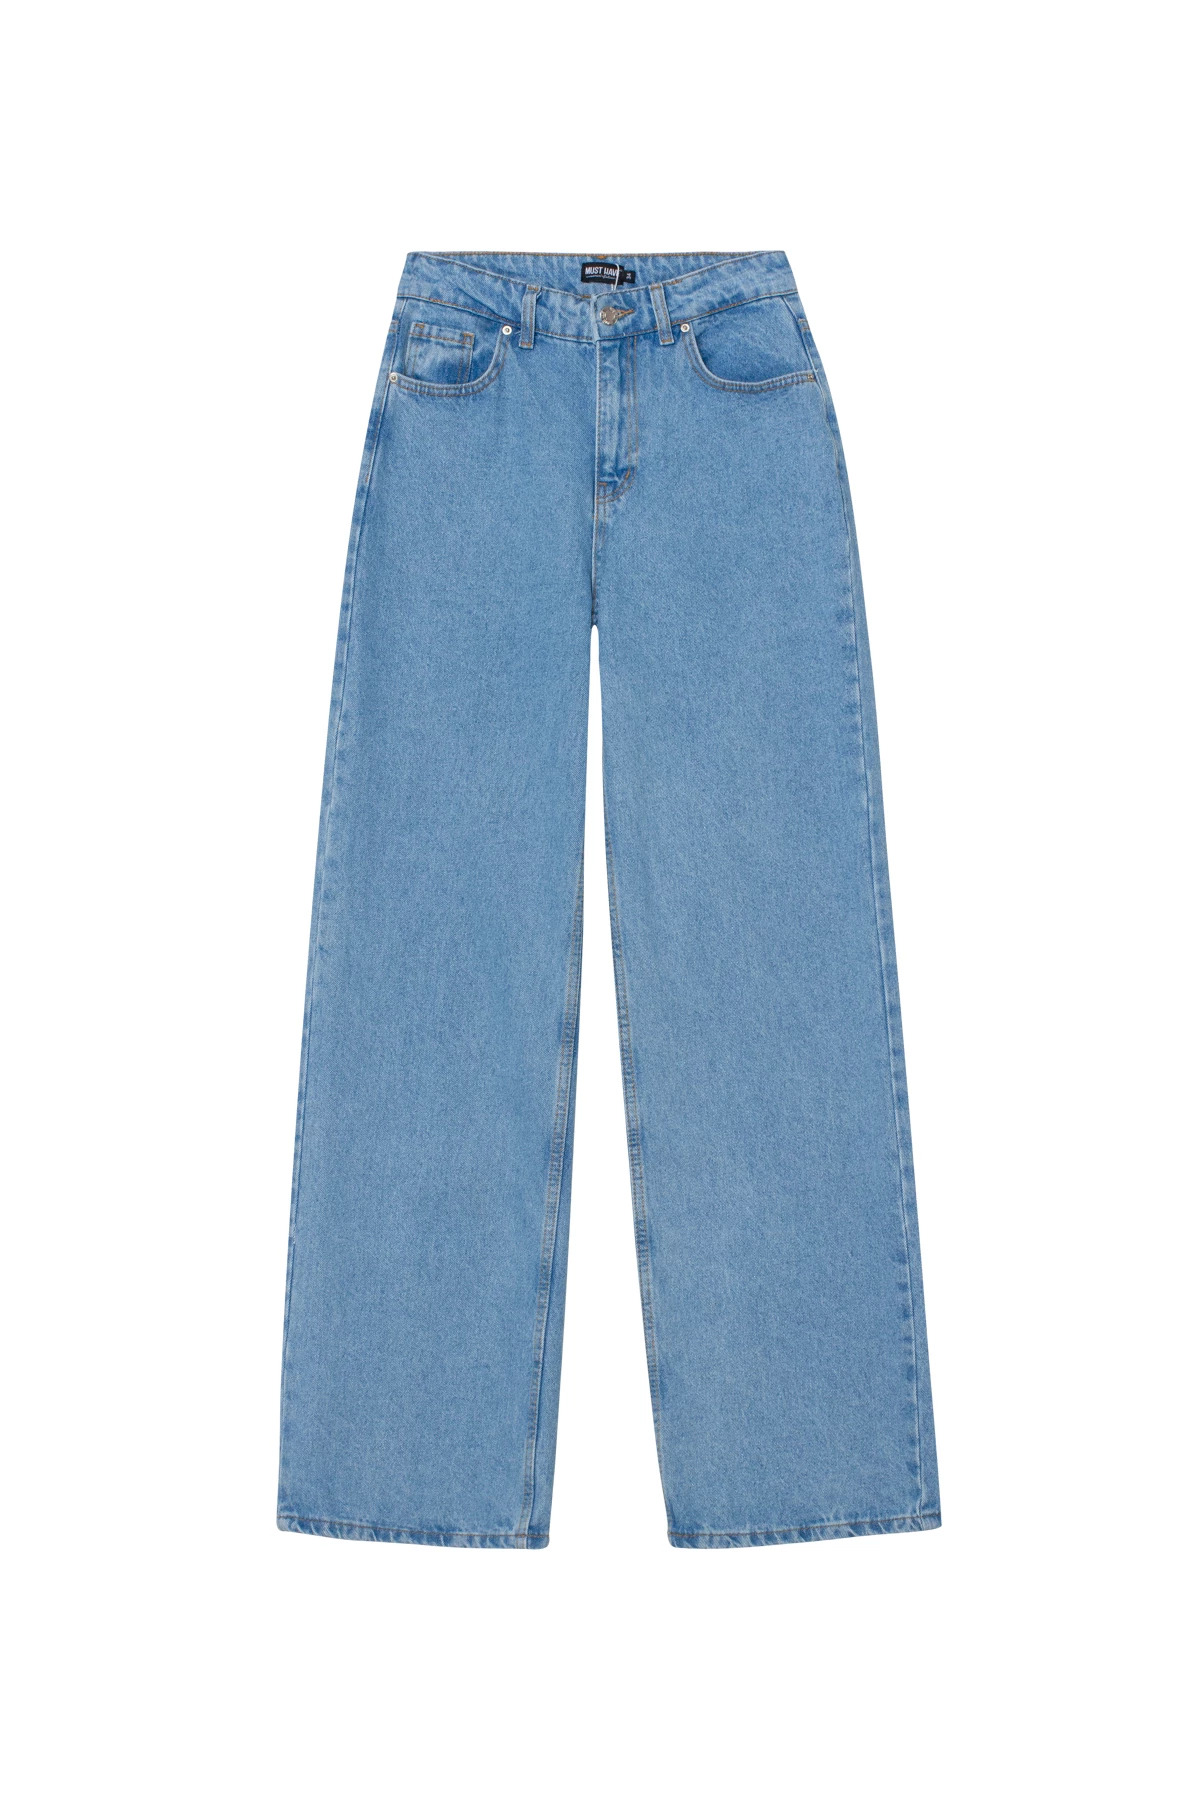 Blue straight-cut jeans, photo 5